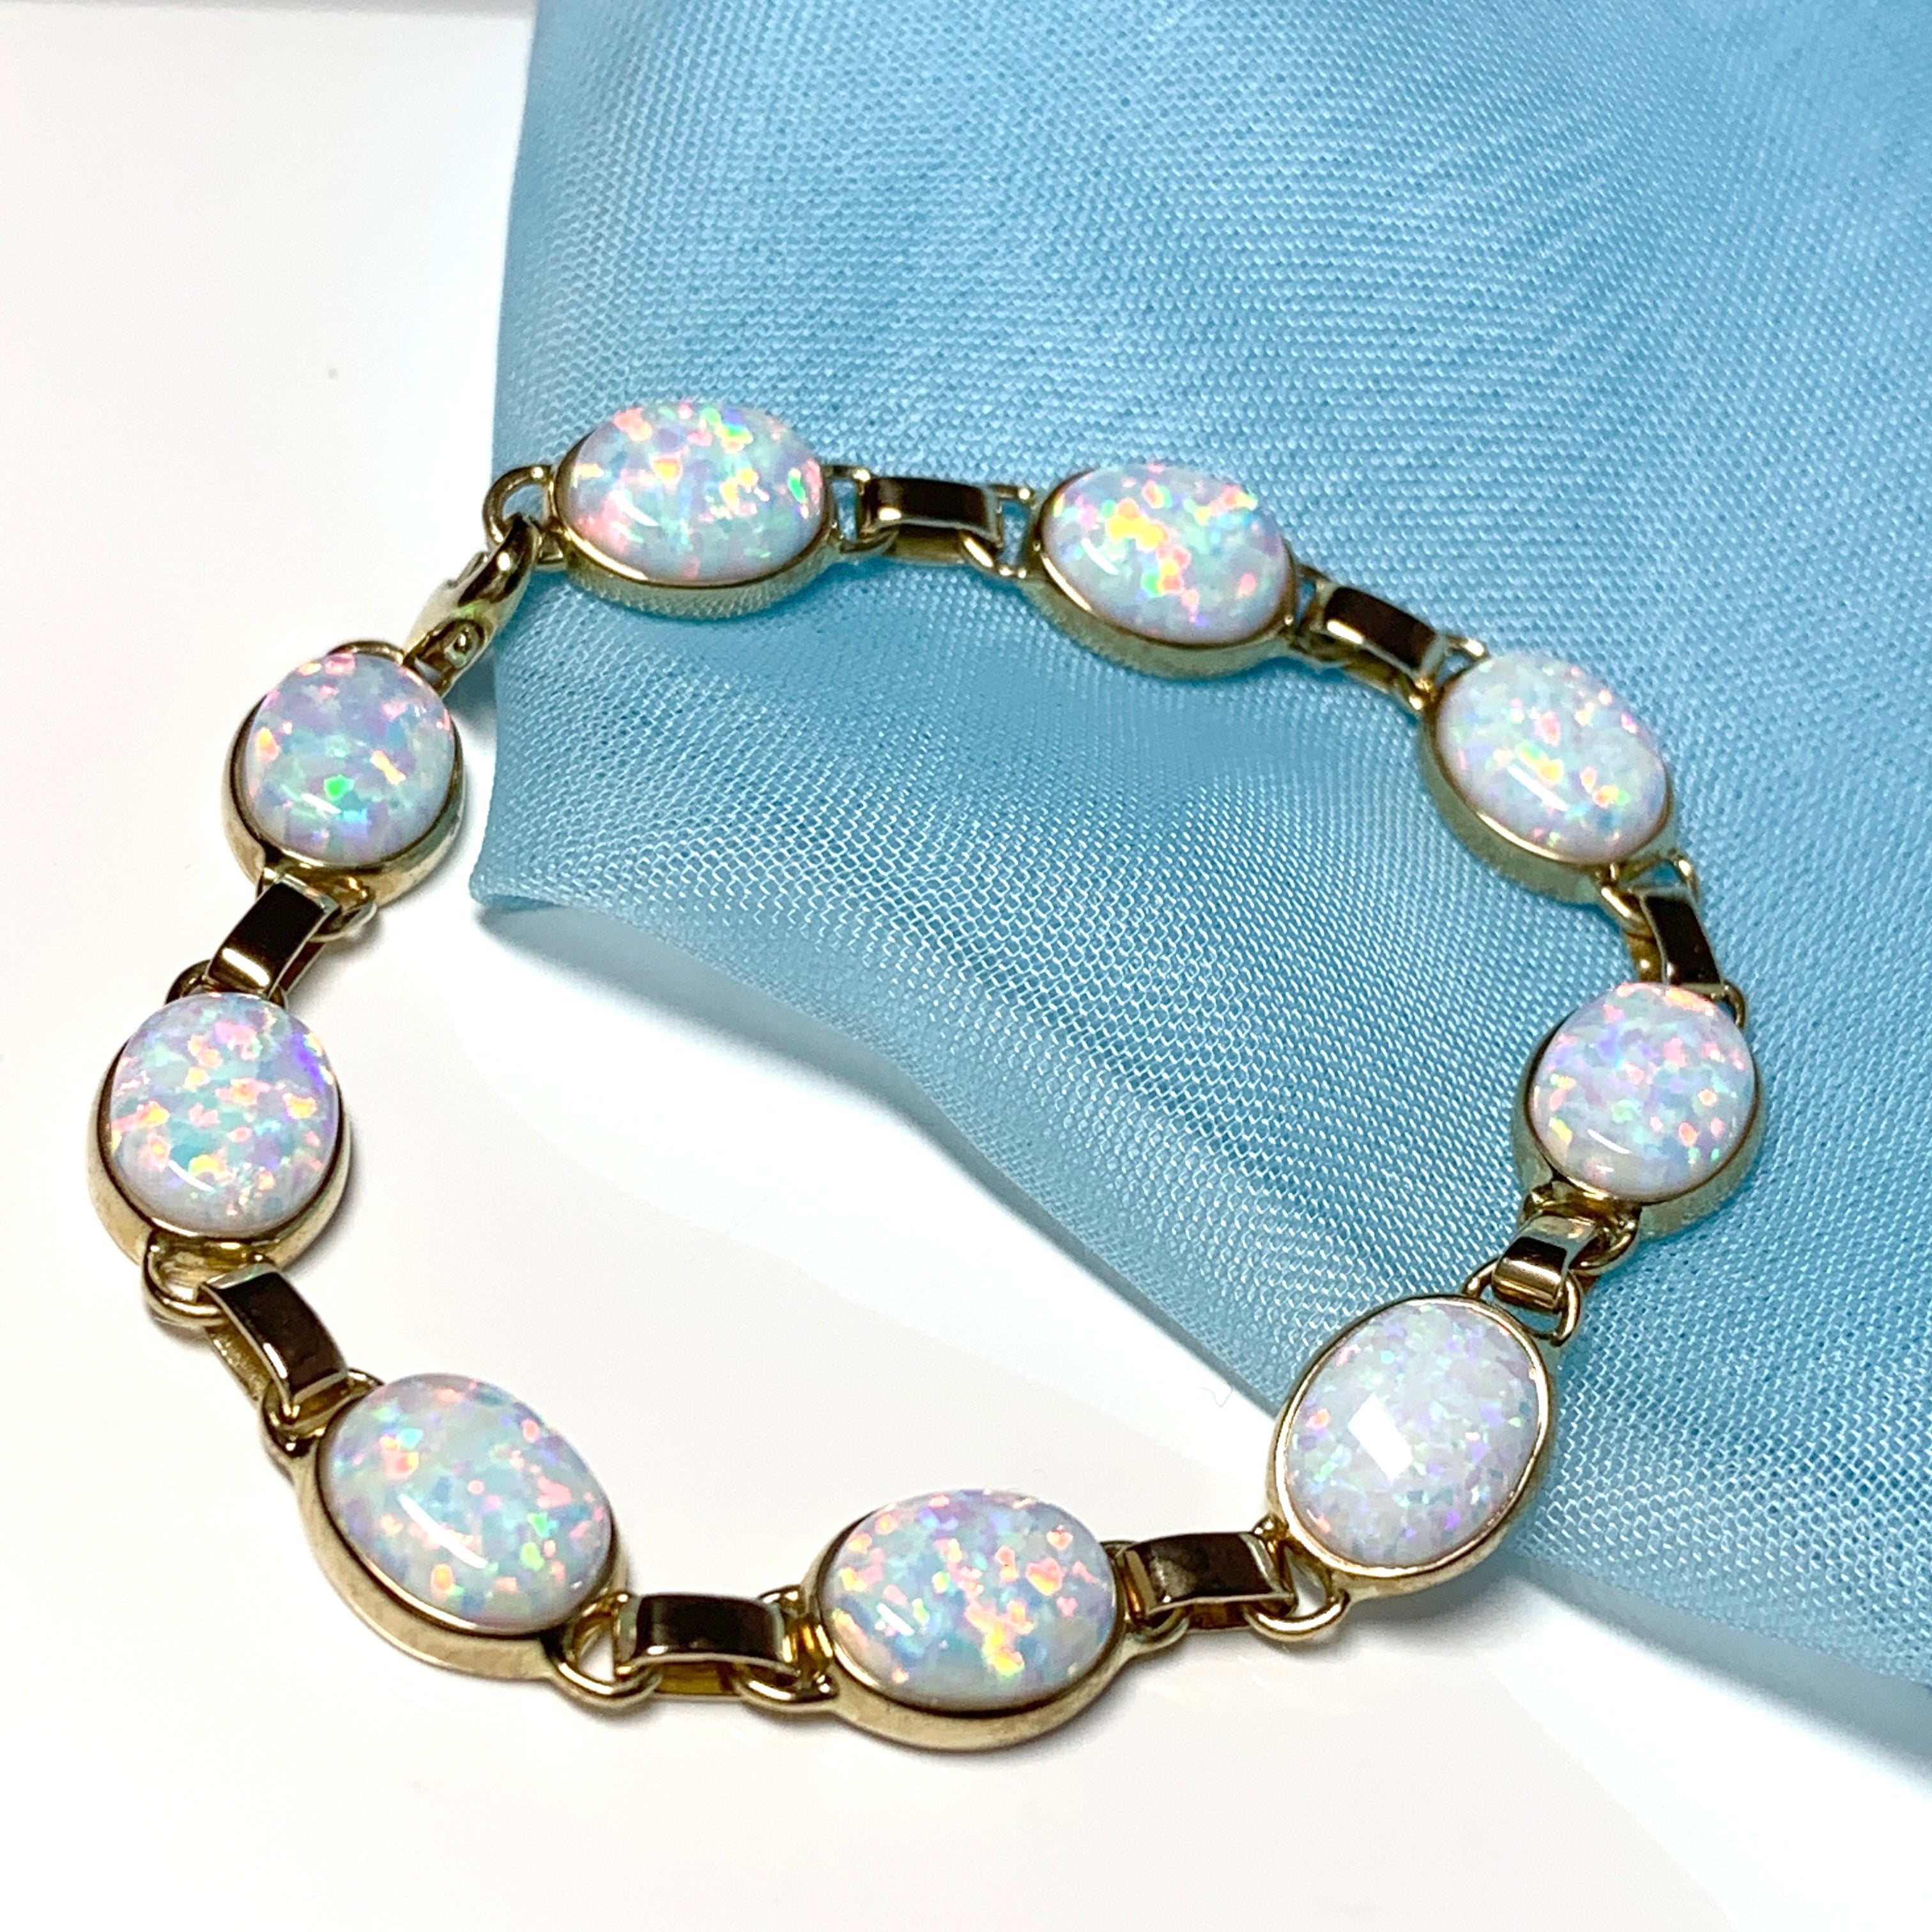 Ethiopian Opal Bracelet for Psychic development Buy healing crystals.